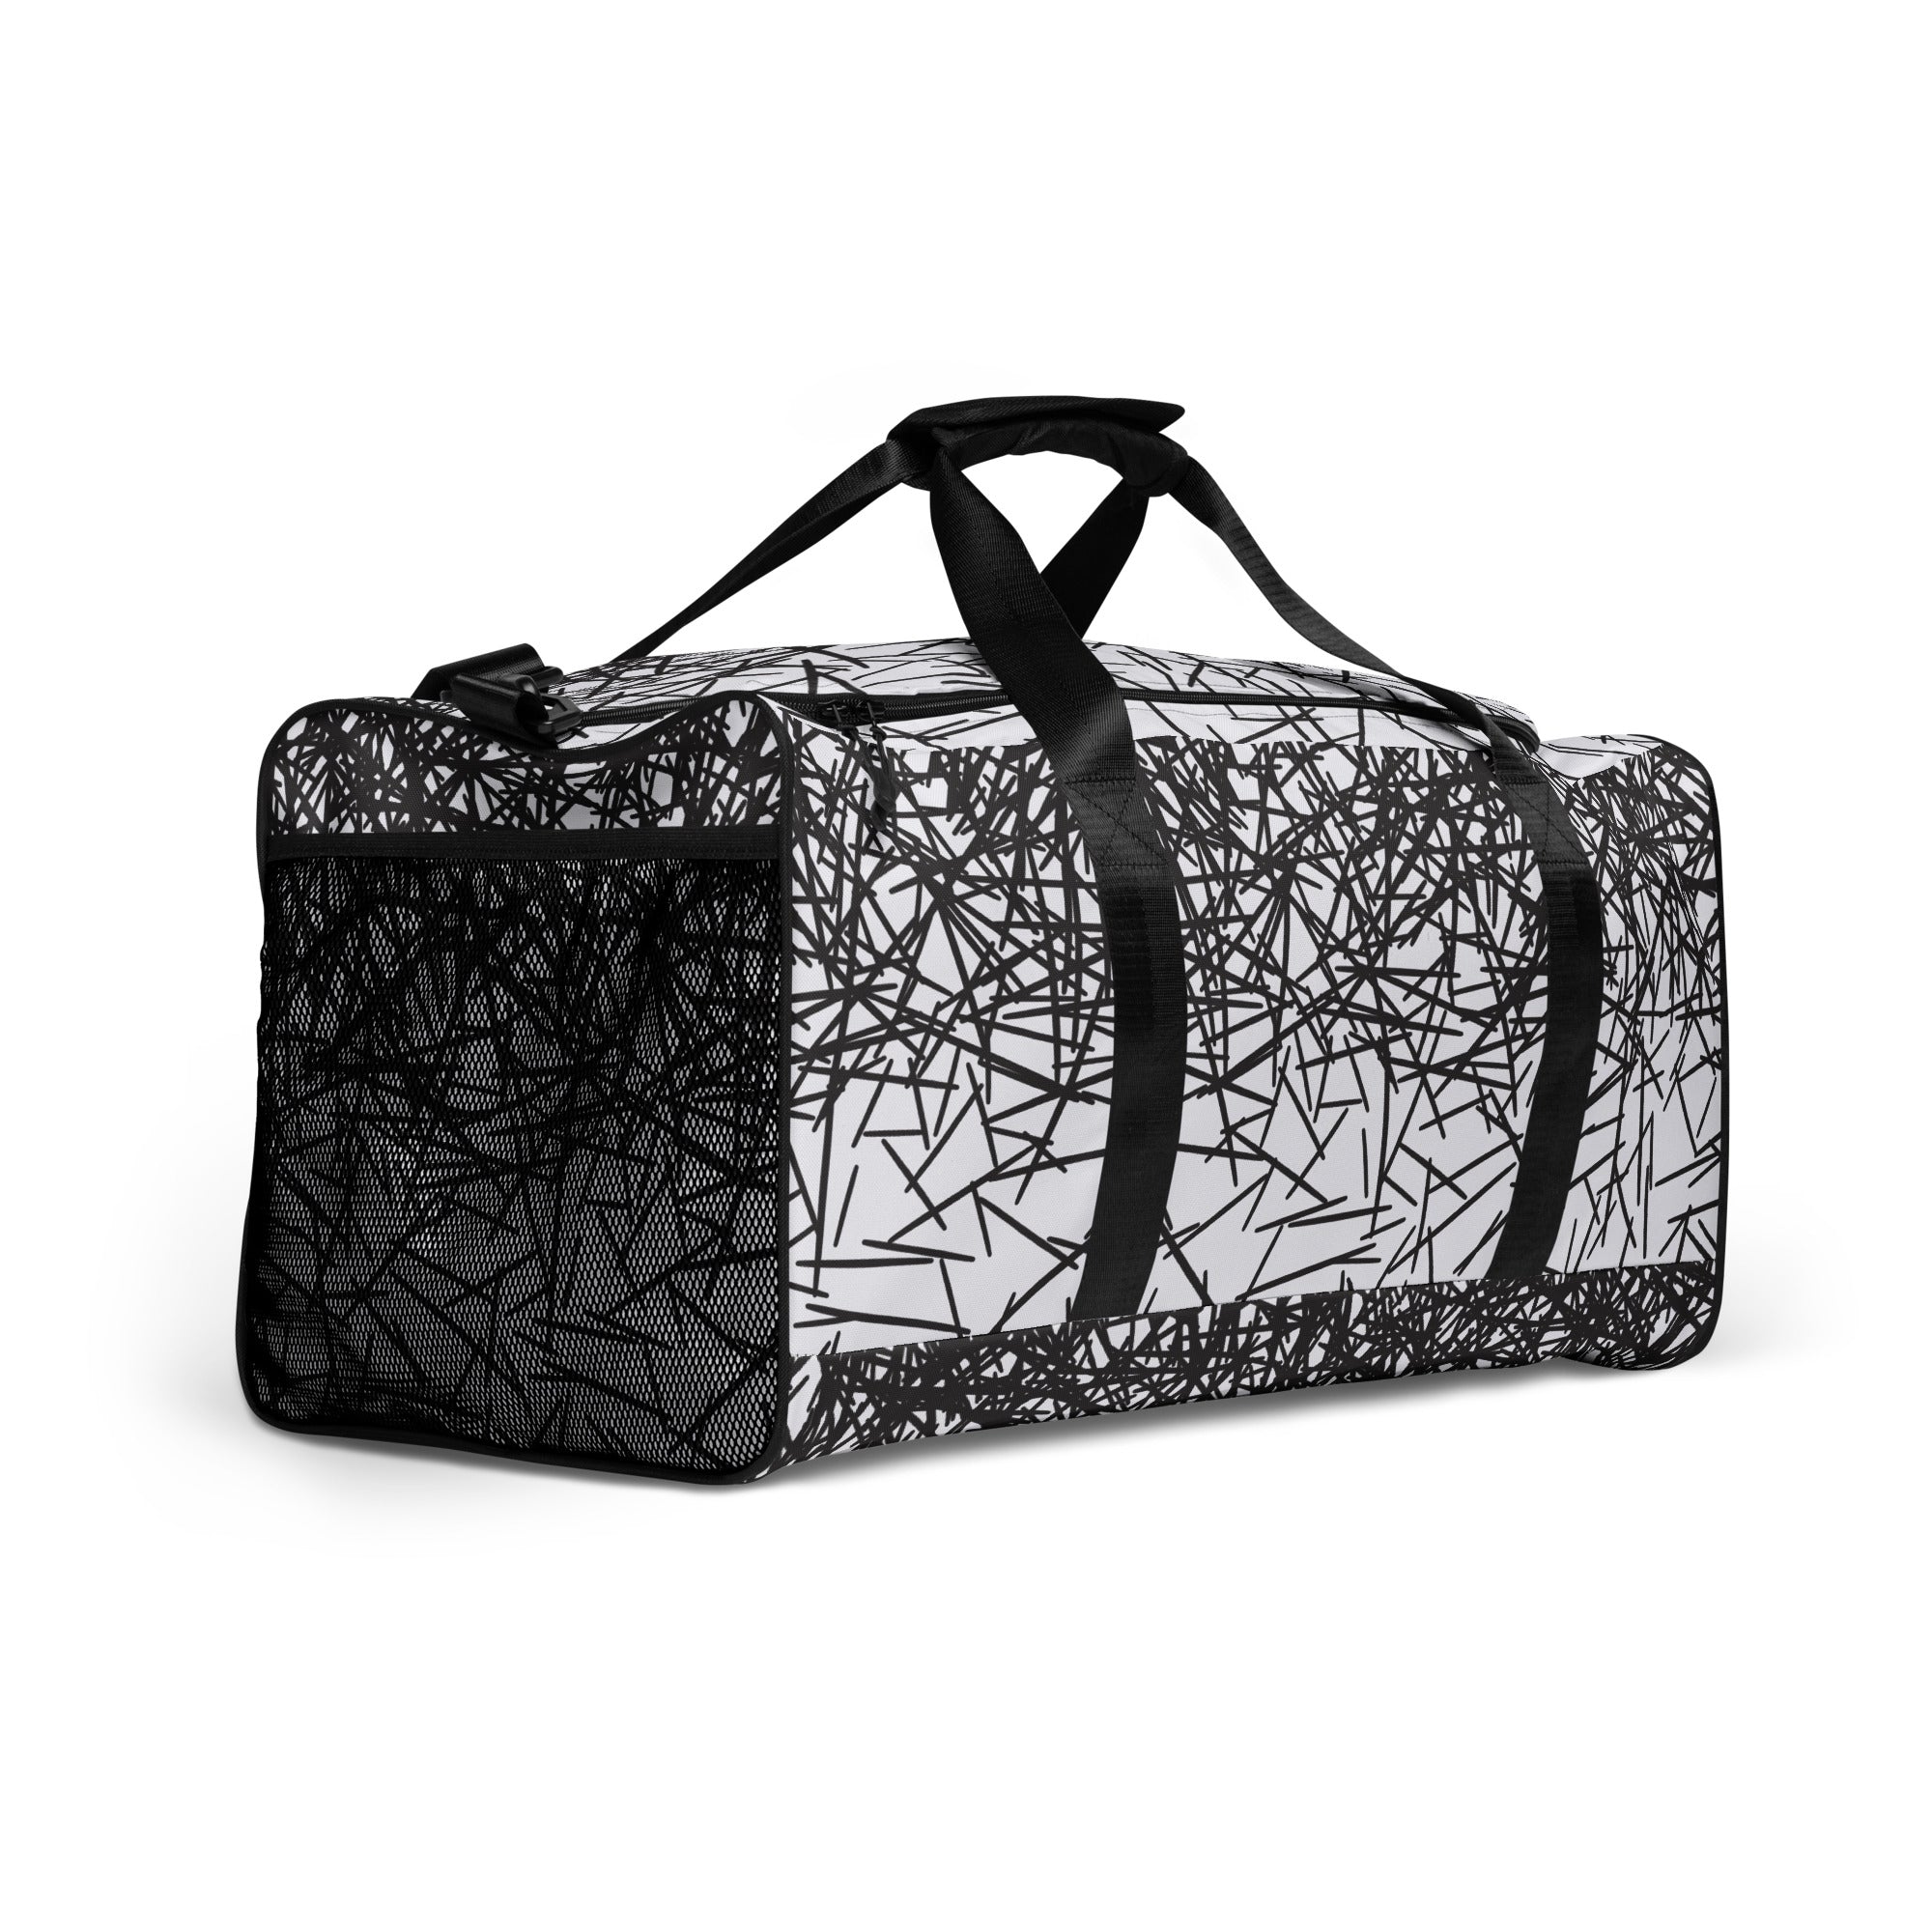 Black & White Ombre Duffle Bag